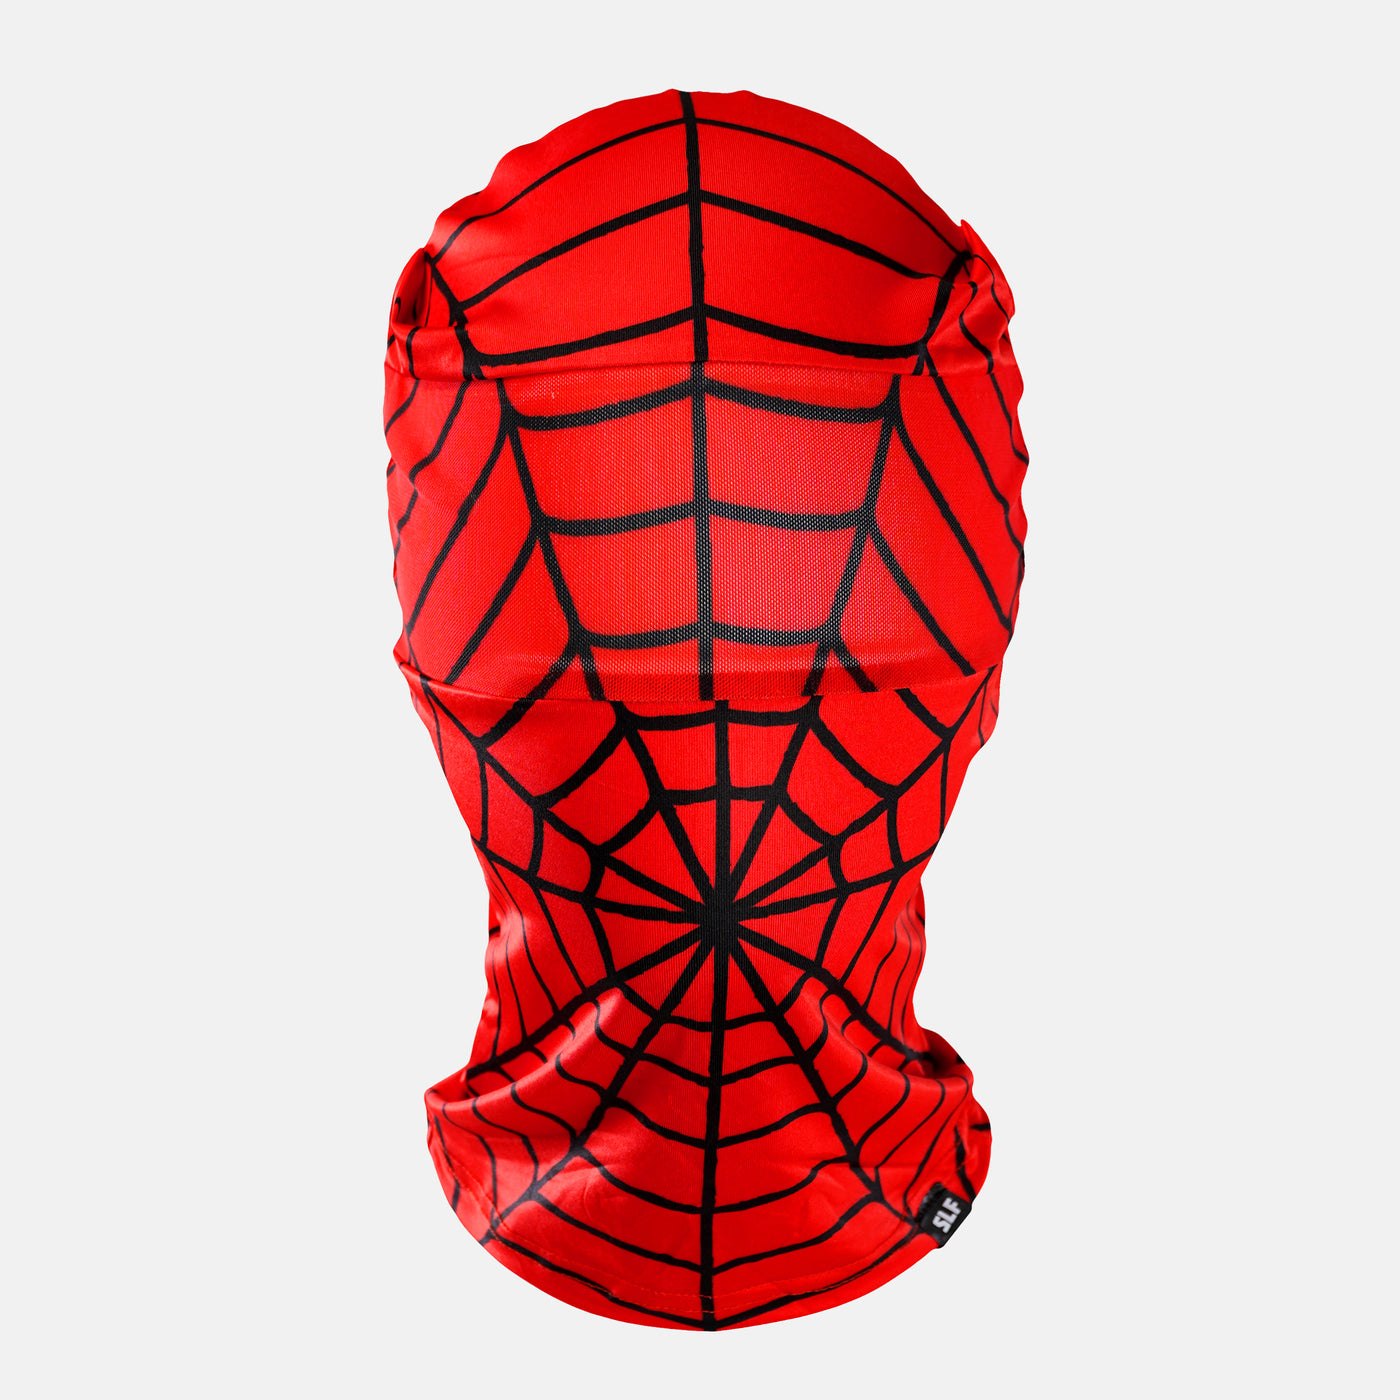 Red Web Head Bag Mask